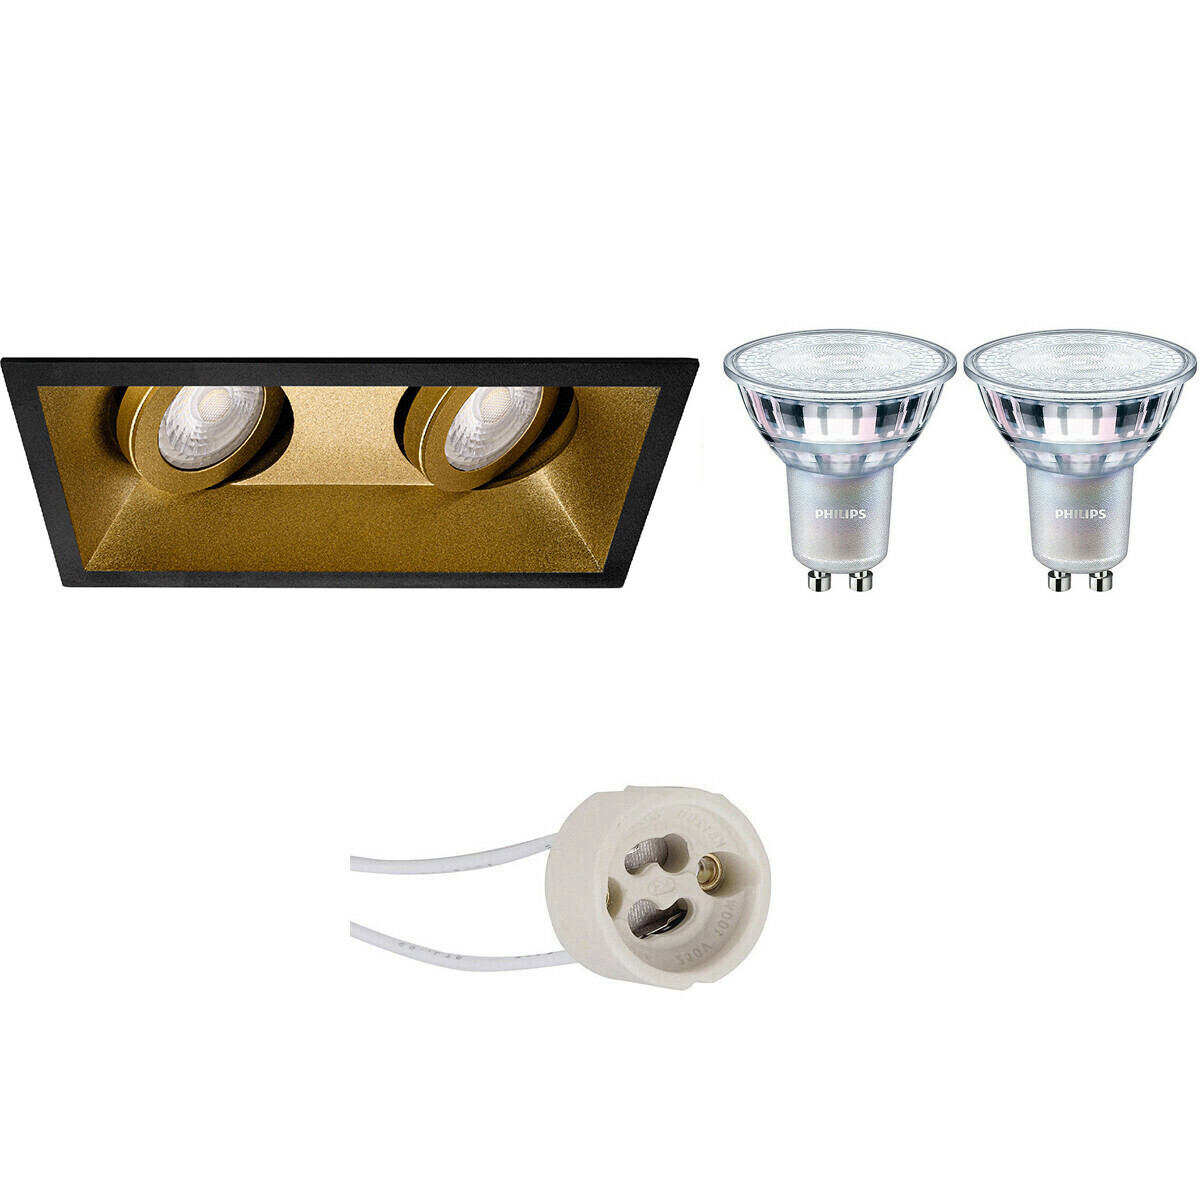 BES LED LED Spot Set - Pragmi Zano Pro - GU10 Fitting - Inbouw Rechthoek Dubbel - Mat Zwart/Goud - Kantelbaar - 185x93mm - Philips - MASTER 927 36D VLE - 4.9W - Warm Wit 2200K-2700K - DimTone Dimbaar